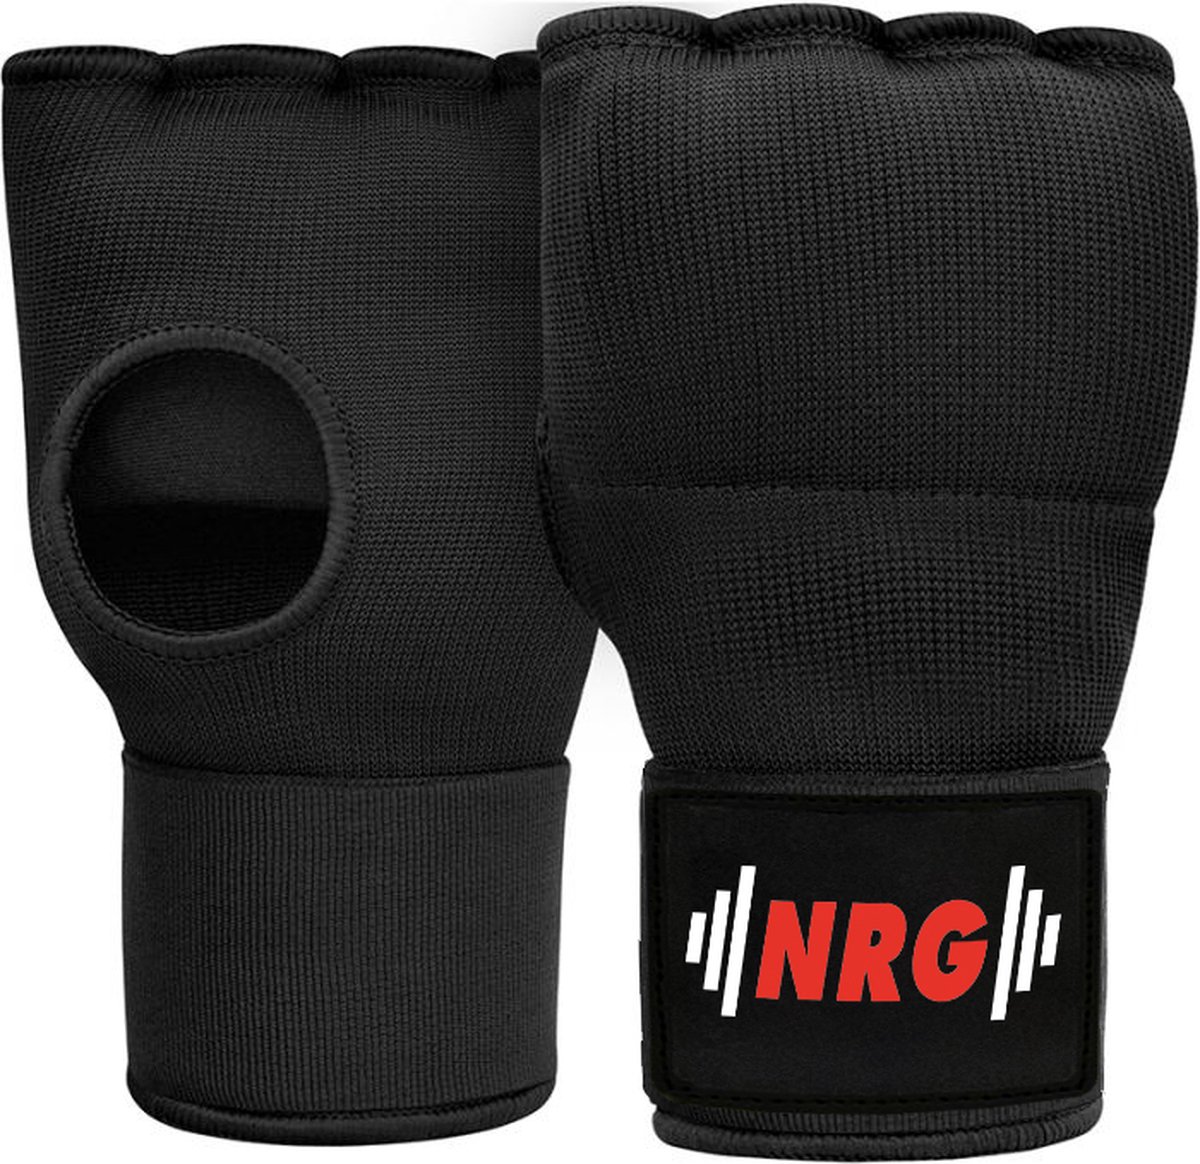 NRG Boxing - Bandage Boksen - Binnenhandschoenen Boksen - Zwart - Katoen - Gel Padding - Met 75 cm lange bandage - Kickboksen -Maat XL